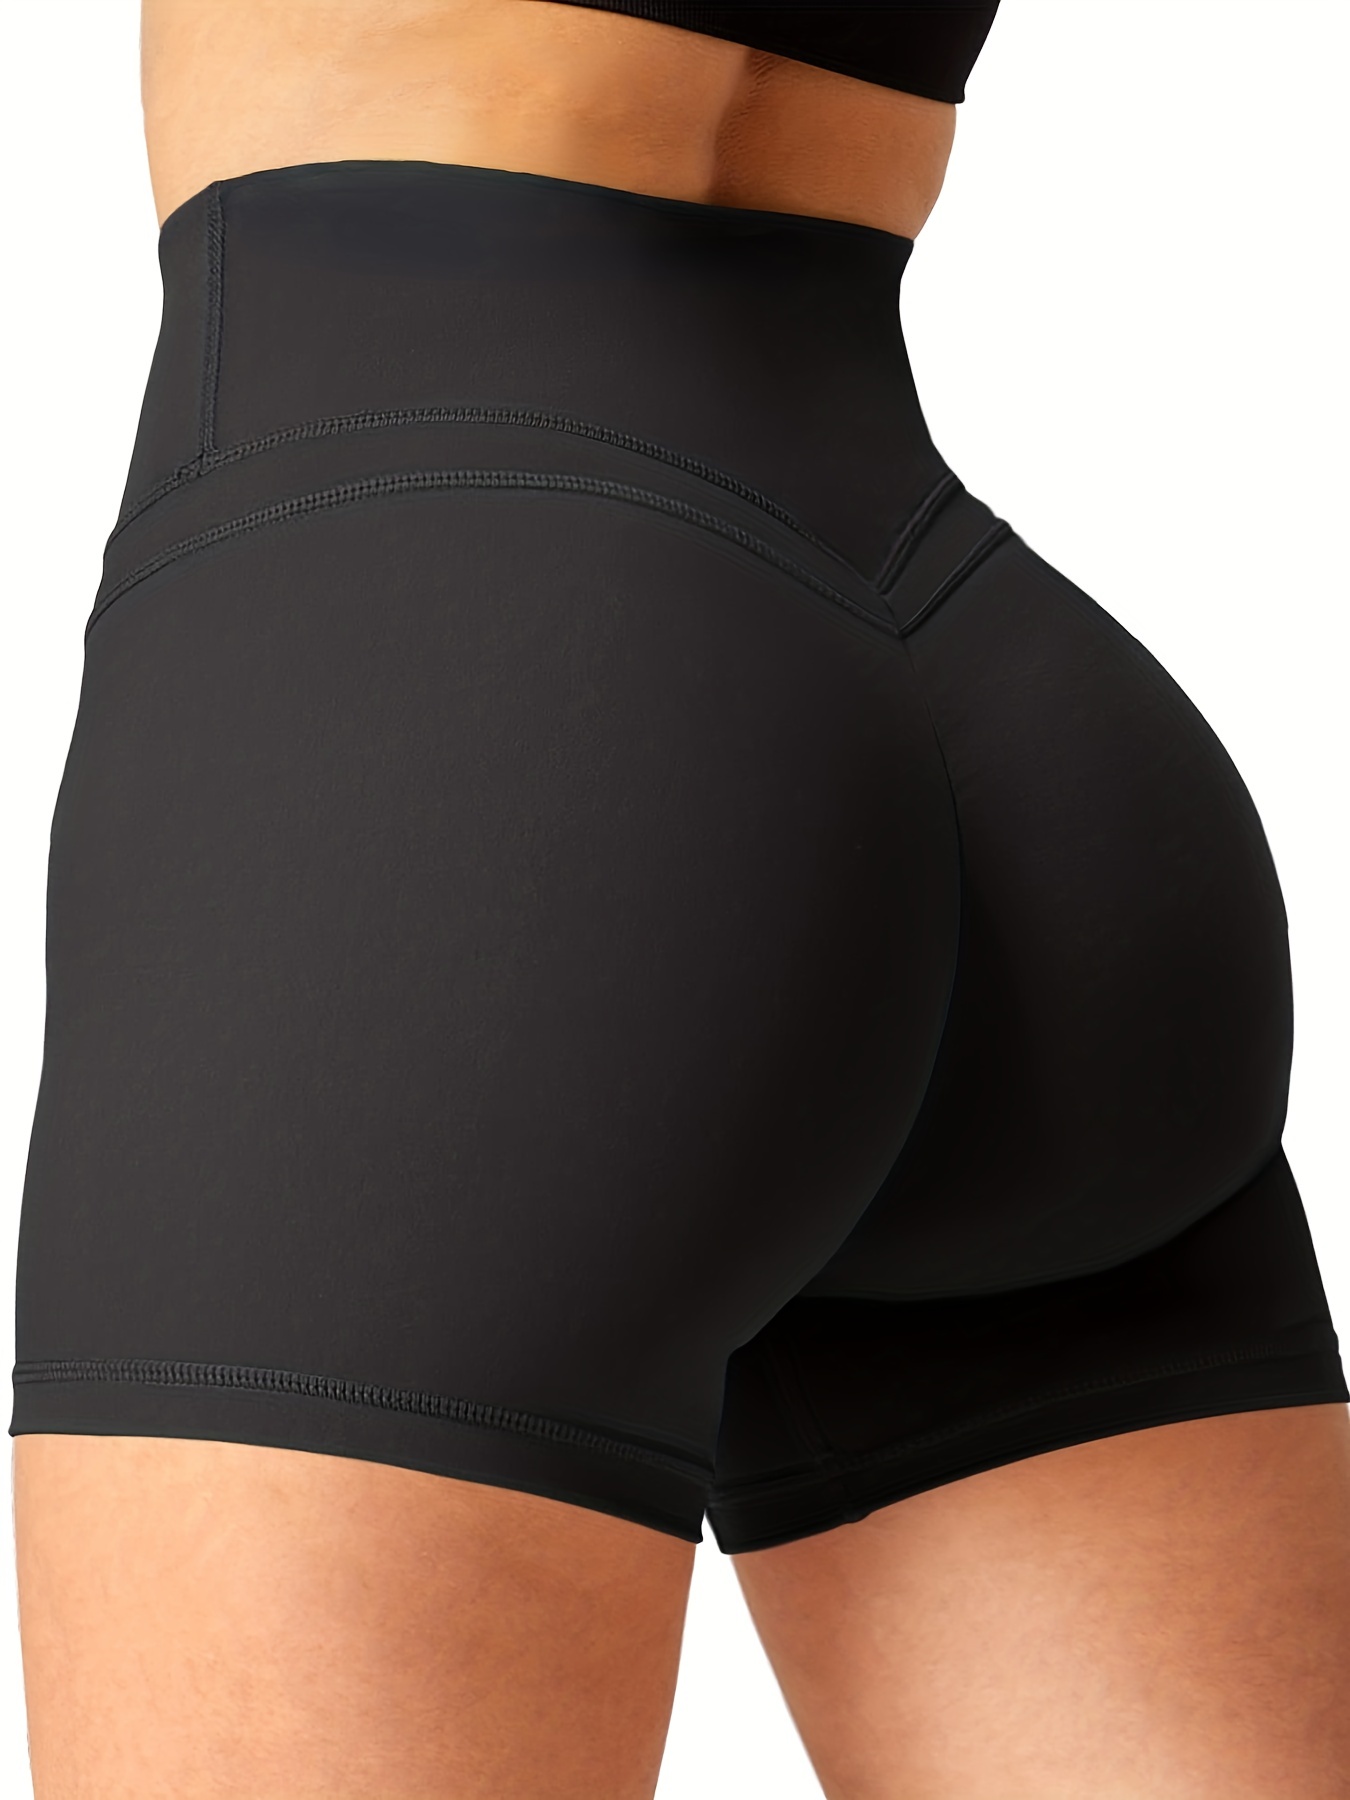 nsendm Waisted Lifting Shorts Waist High Shorts Biker Women Workout V Yoga  Shorts Yoga Pants Women Petite Short Shorts Black Small